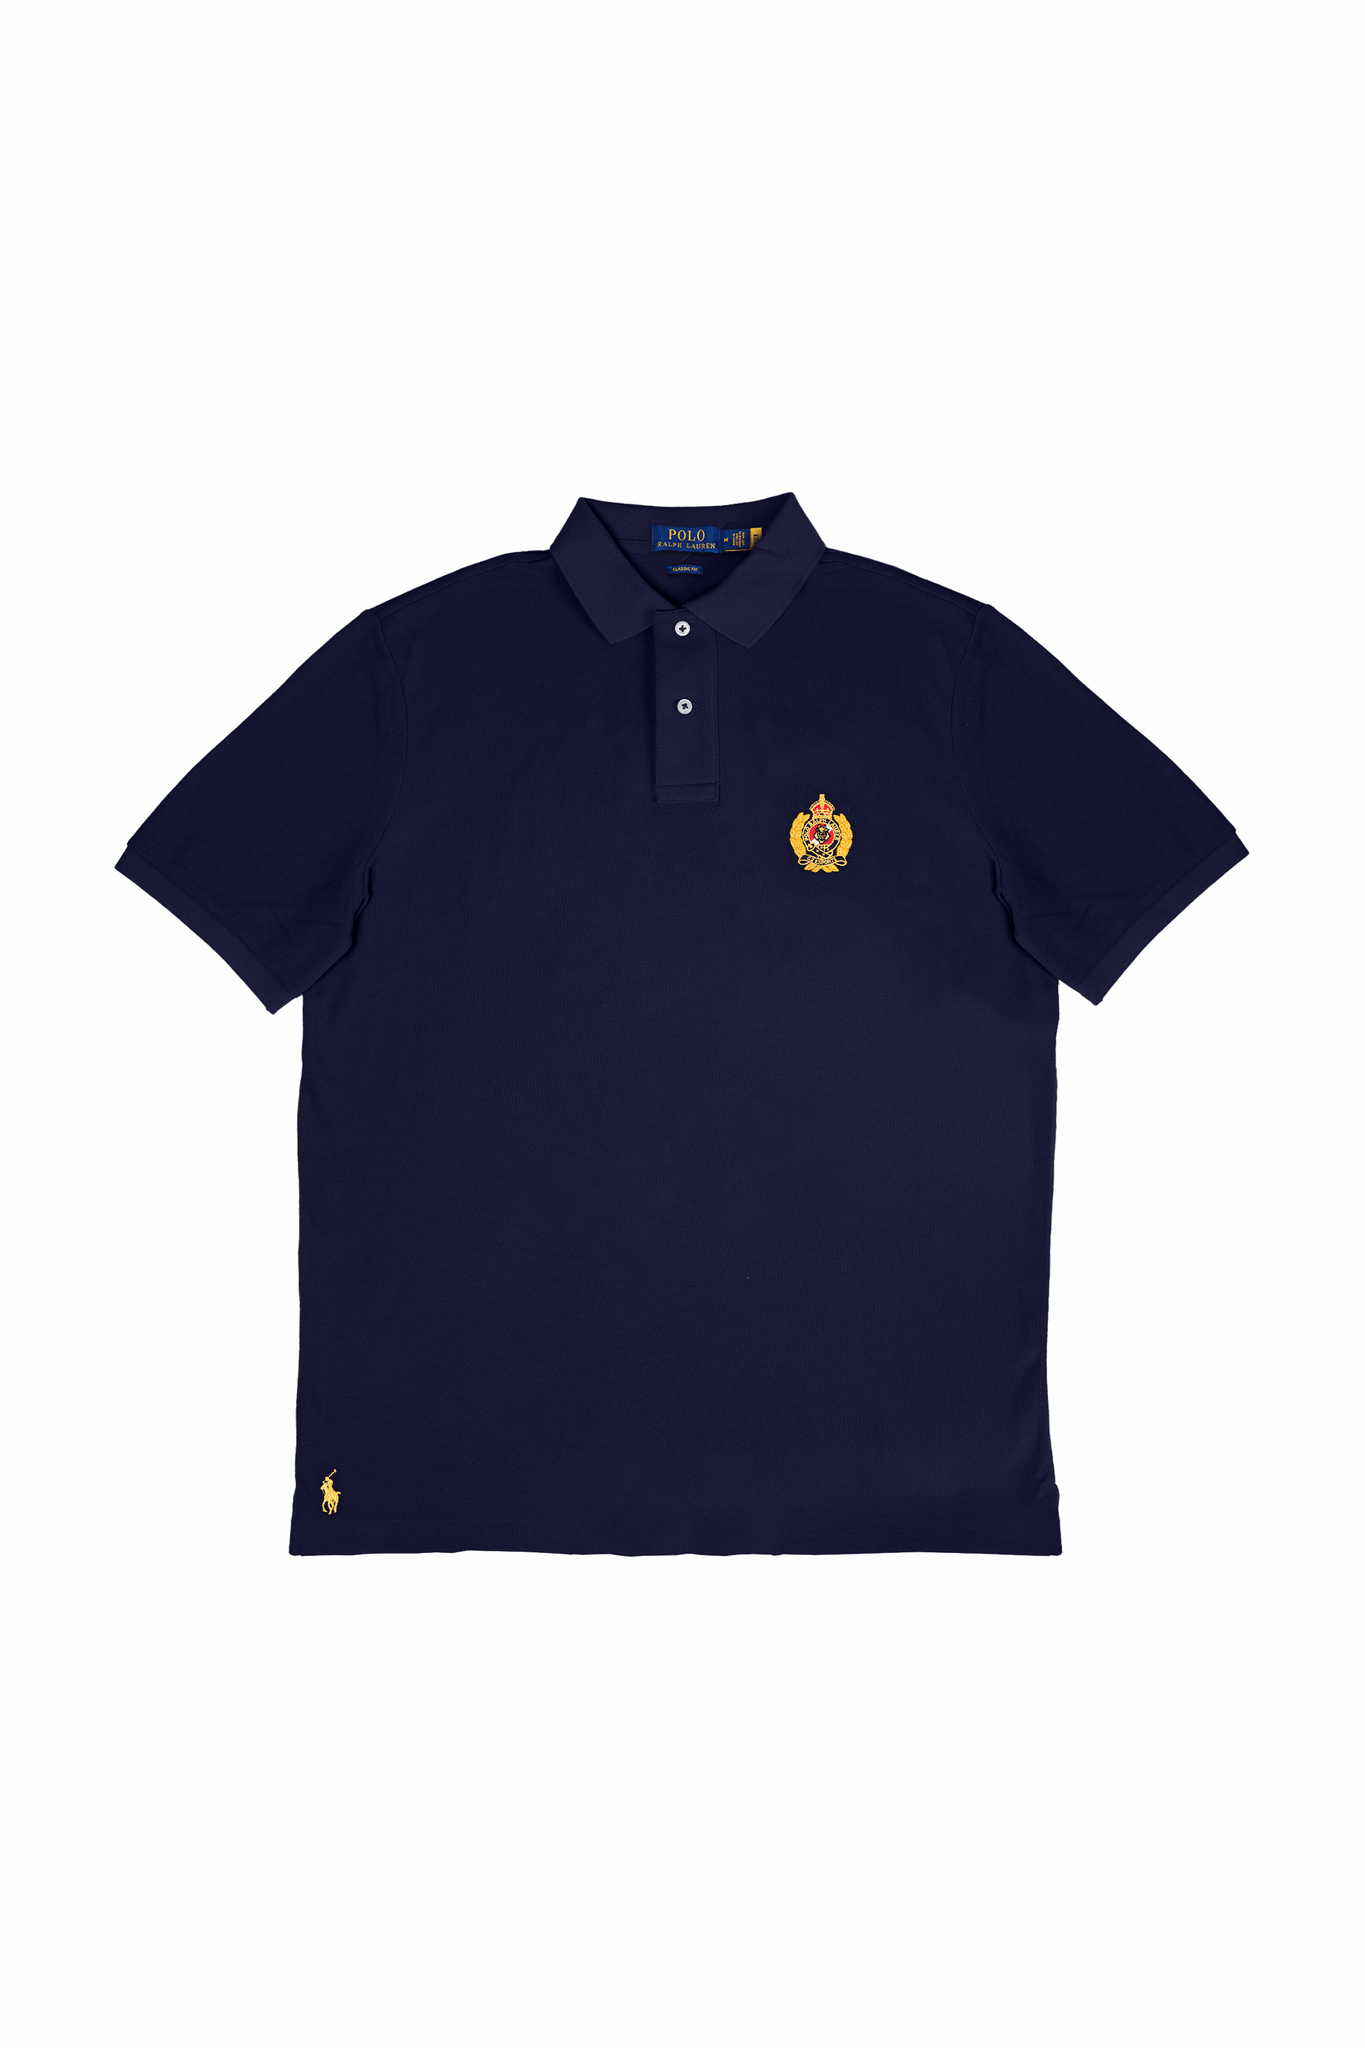 Polo x G2 Esports Unisex - Polo Shirt - Navy